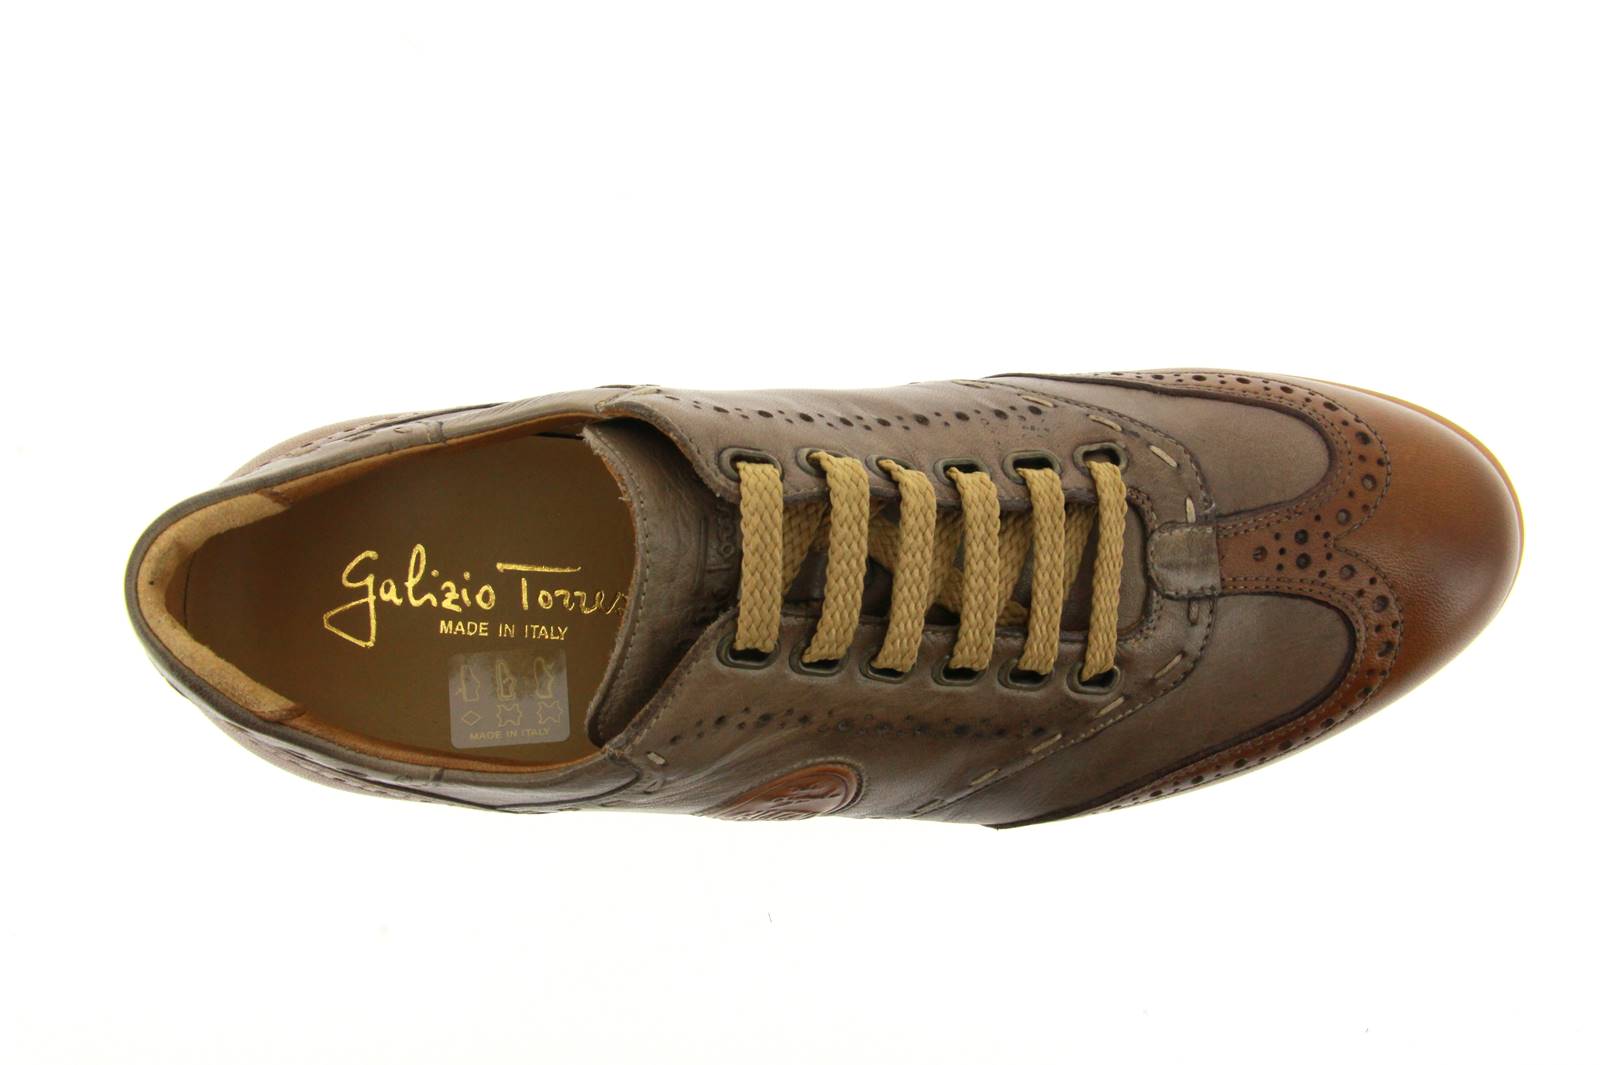 Galizio Toressi Sneaker FOULARD MARRONE TAUPE (43)